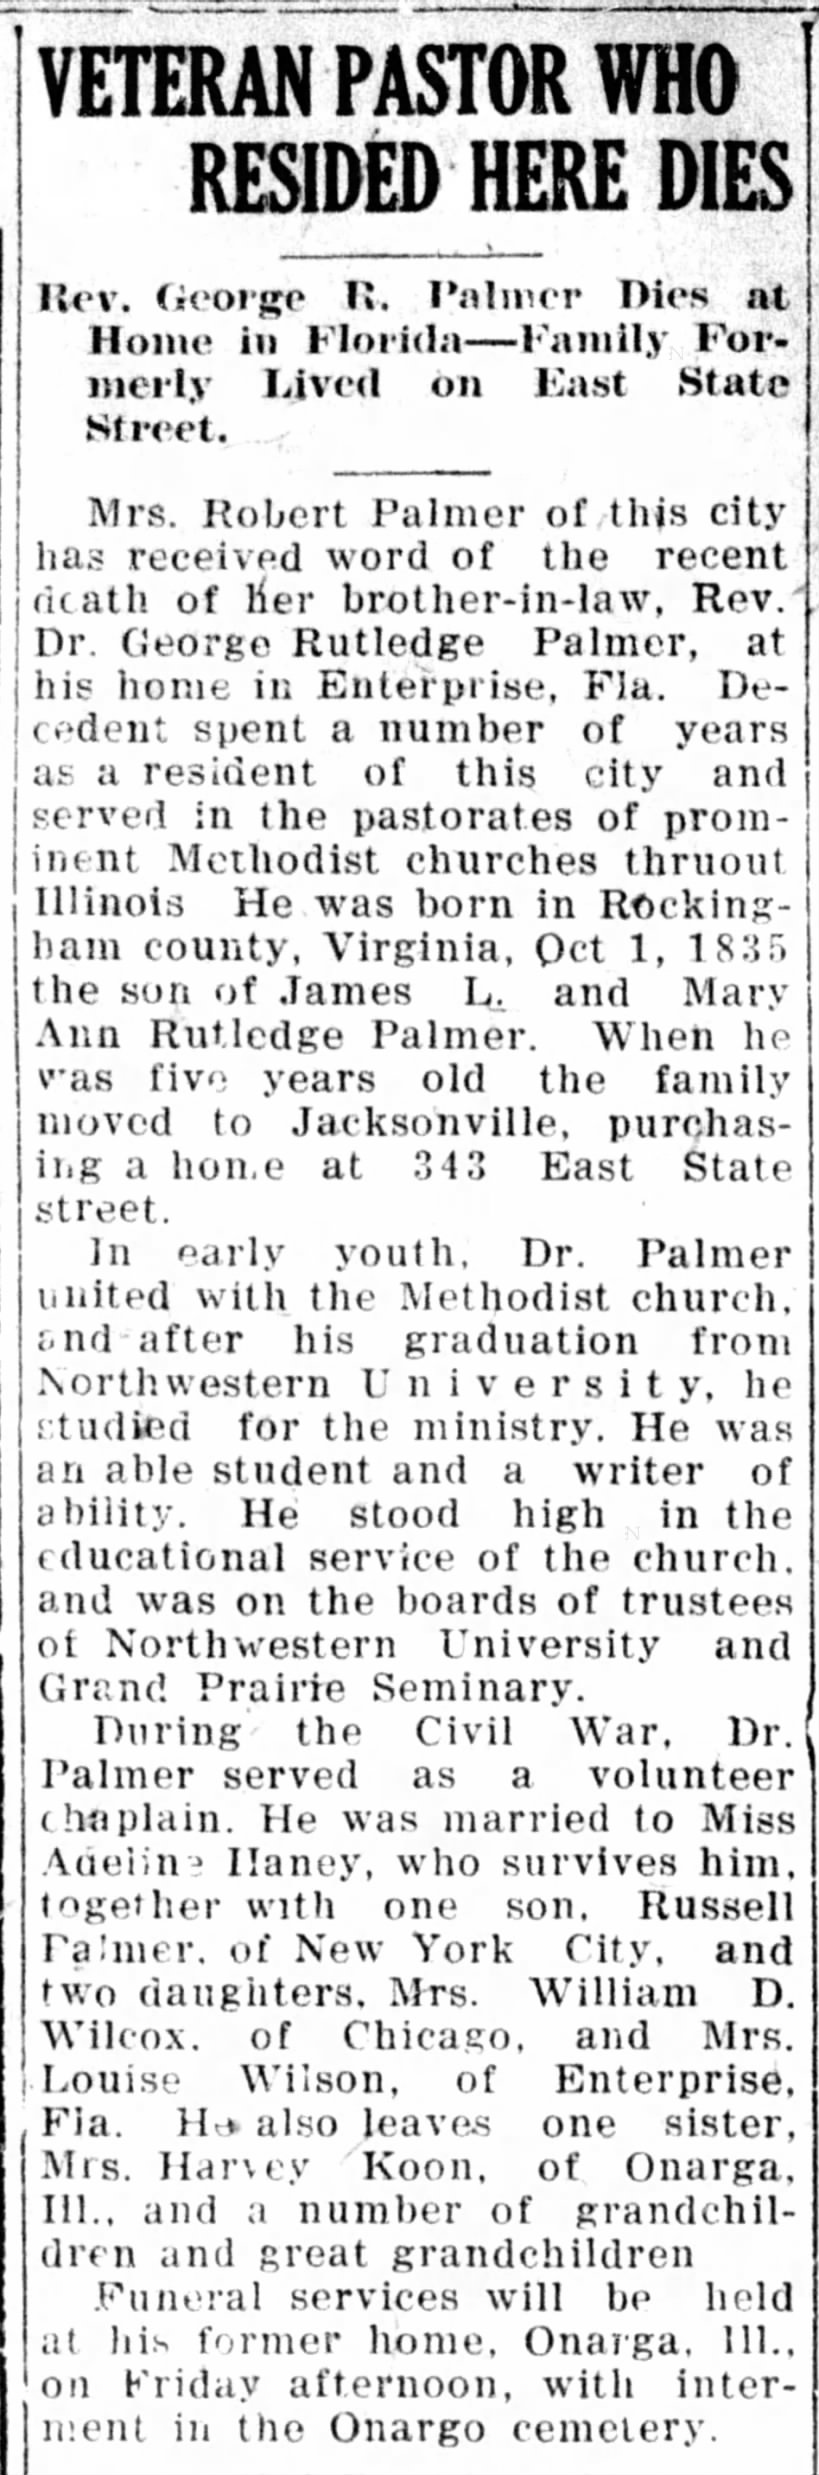 Jacksonville Daily Journal (Jacksonville, Illinois) April 9, 1924 page 6